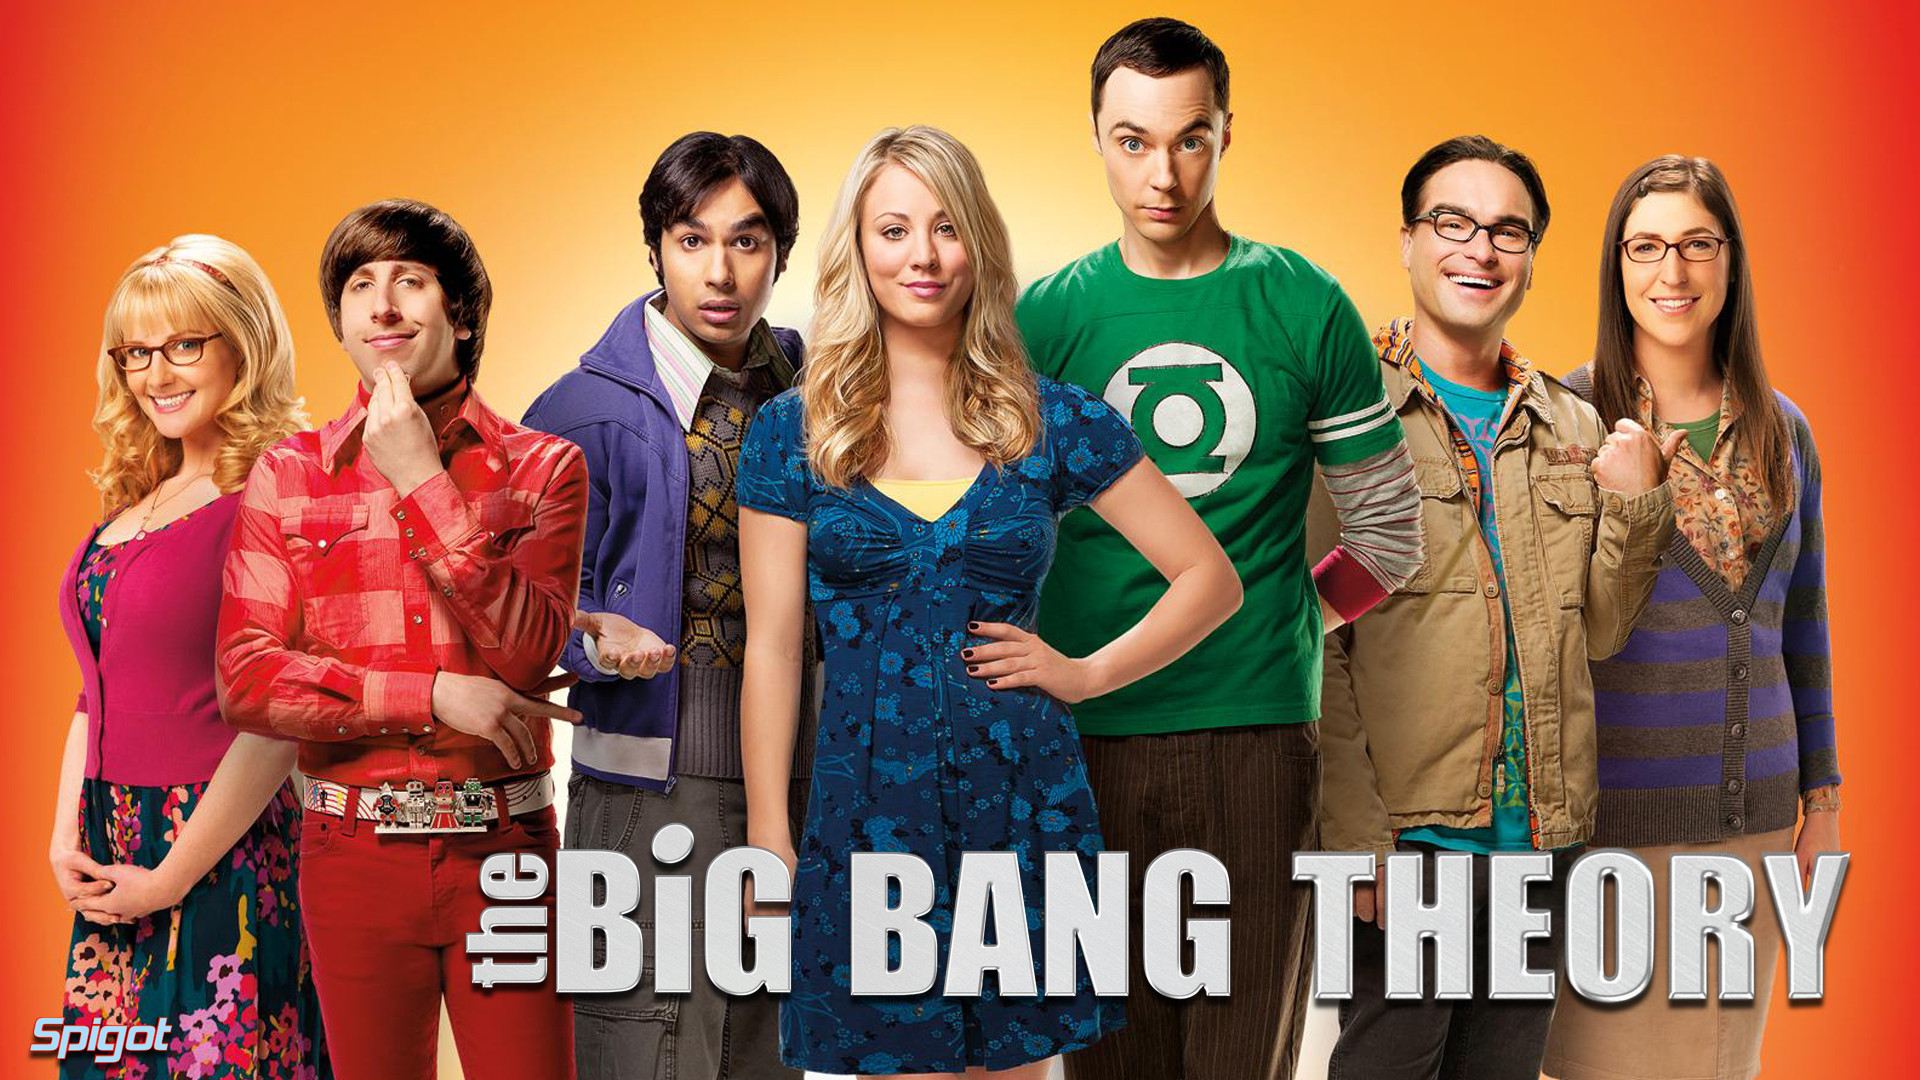 The Big Bang Theory, nam dien vien co thu nhap cao nhat